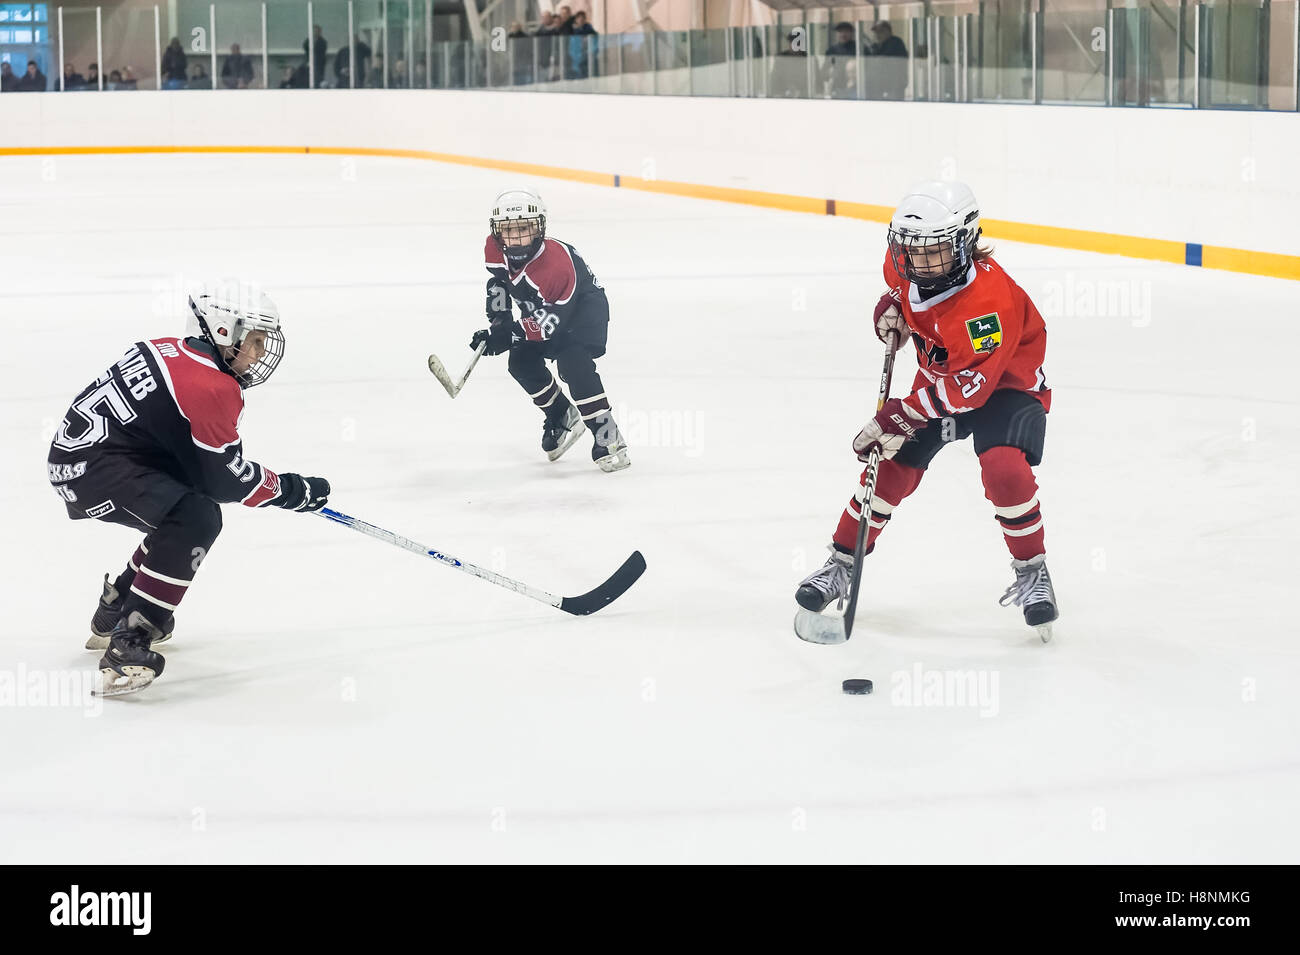 Game of children ice-hockey teams Stock Photo